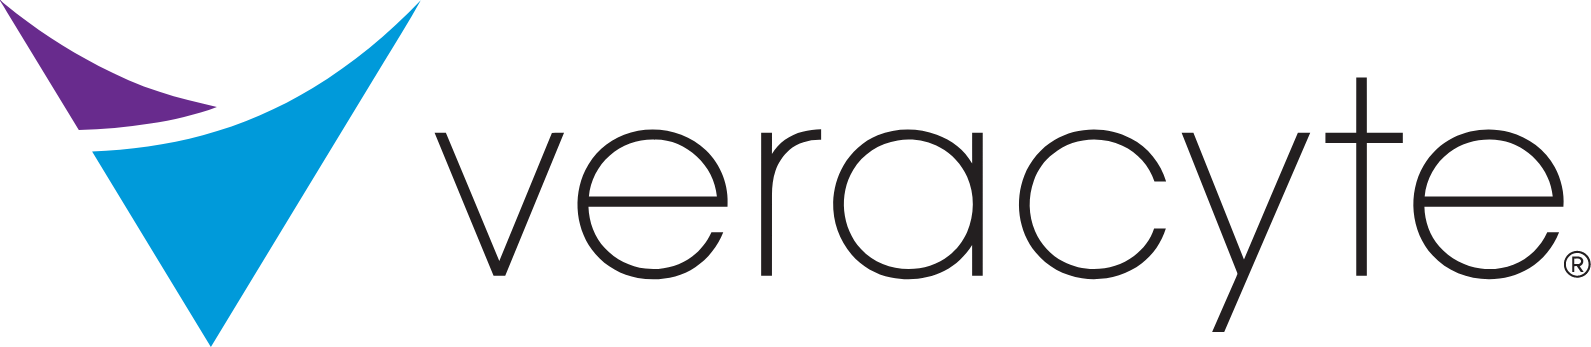 Veracyte logo large (transparent PNG)